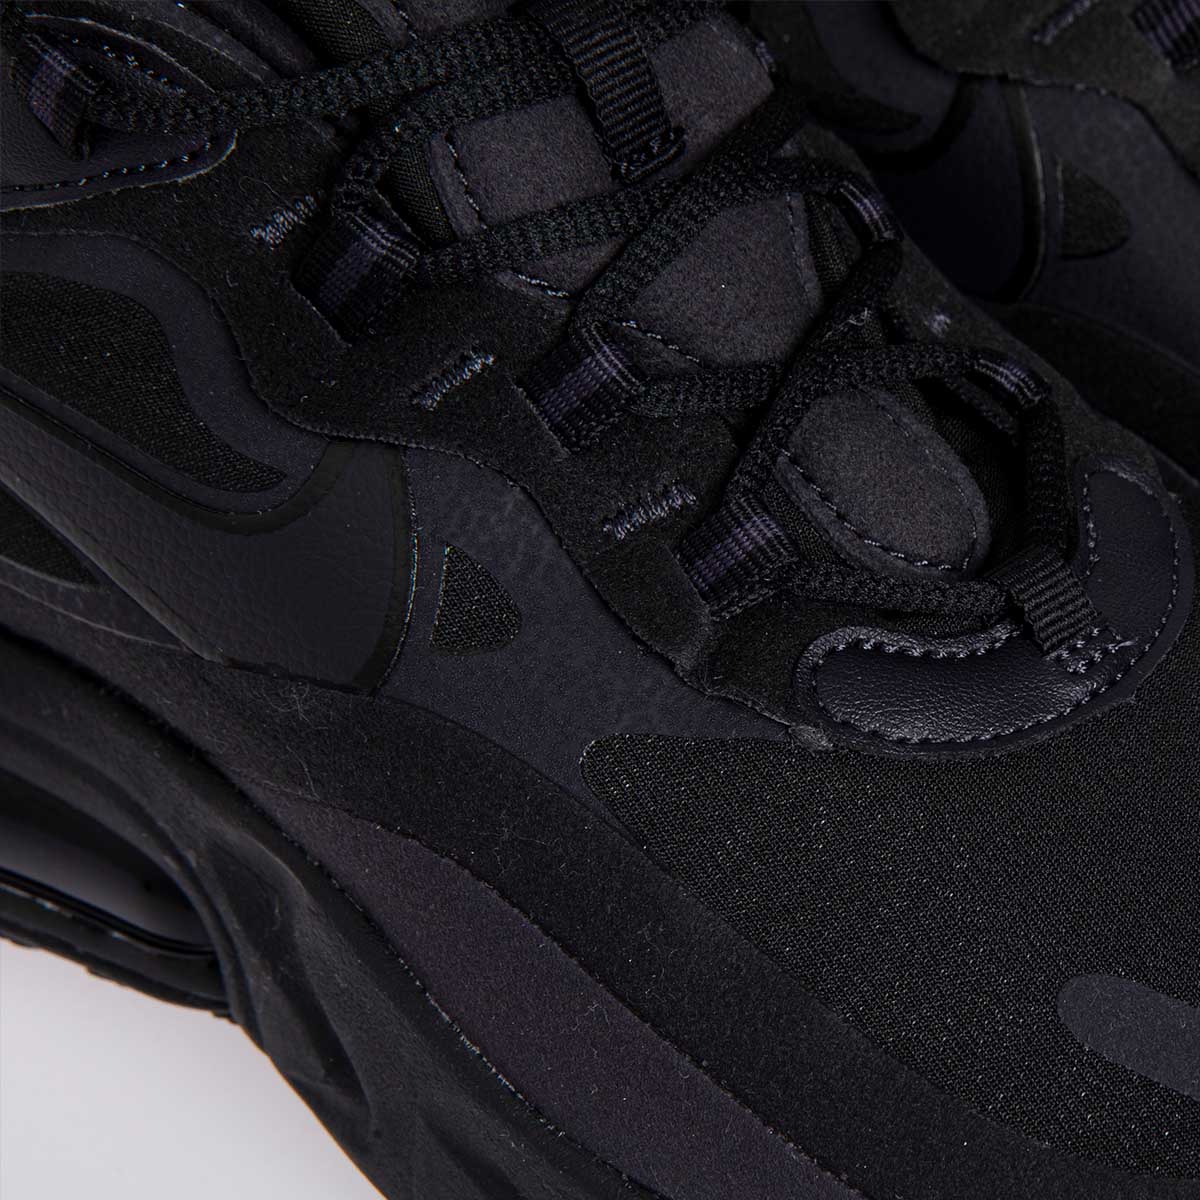 Sneakers Nike Air Max 270 React Black Oil Grey Oil Grey Black Ci3866 003 Bludshop Com